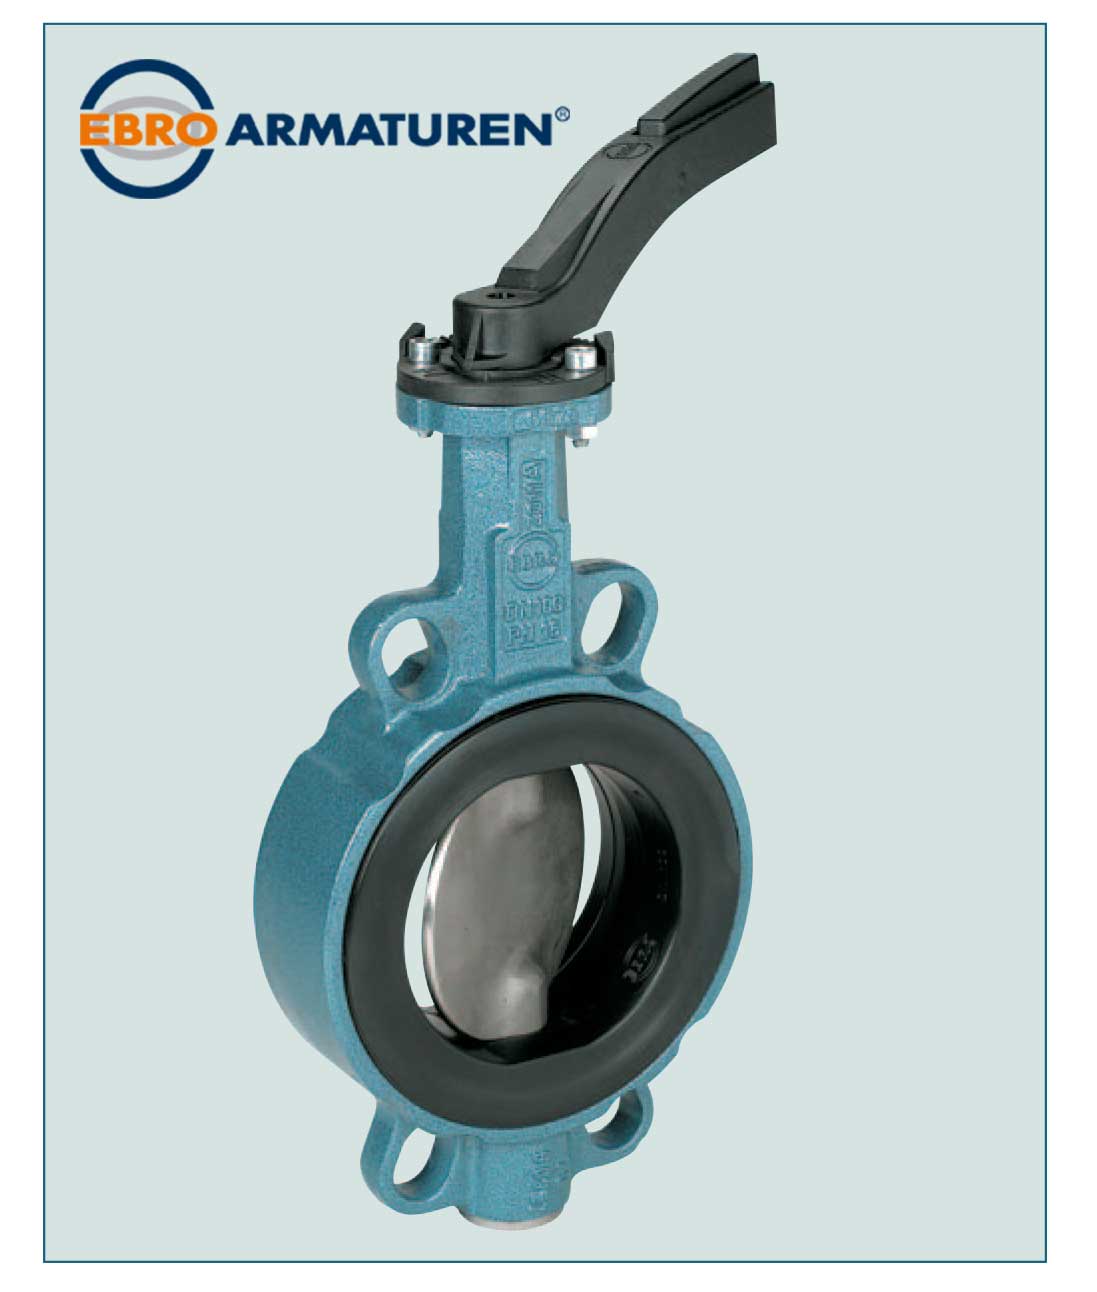 EBRO บัตเตอร์ฟลายวาล์ว (wafer type butterfly valve)รุ่น Z 011-A มีขนาดให้เลือกใช้ DN 20 – DN 200 ทนแรงดันสูงสุด 16บาร์ วัสดุเหล็กหล่อ Liner Seat: EPDM / DISC: CF8M Stainless 316 / Flanged: jis10K/PN10/PN16